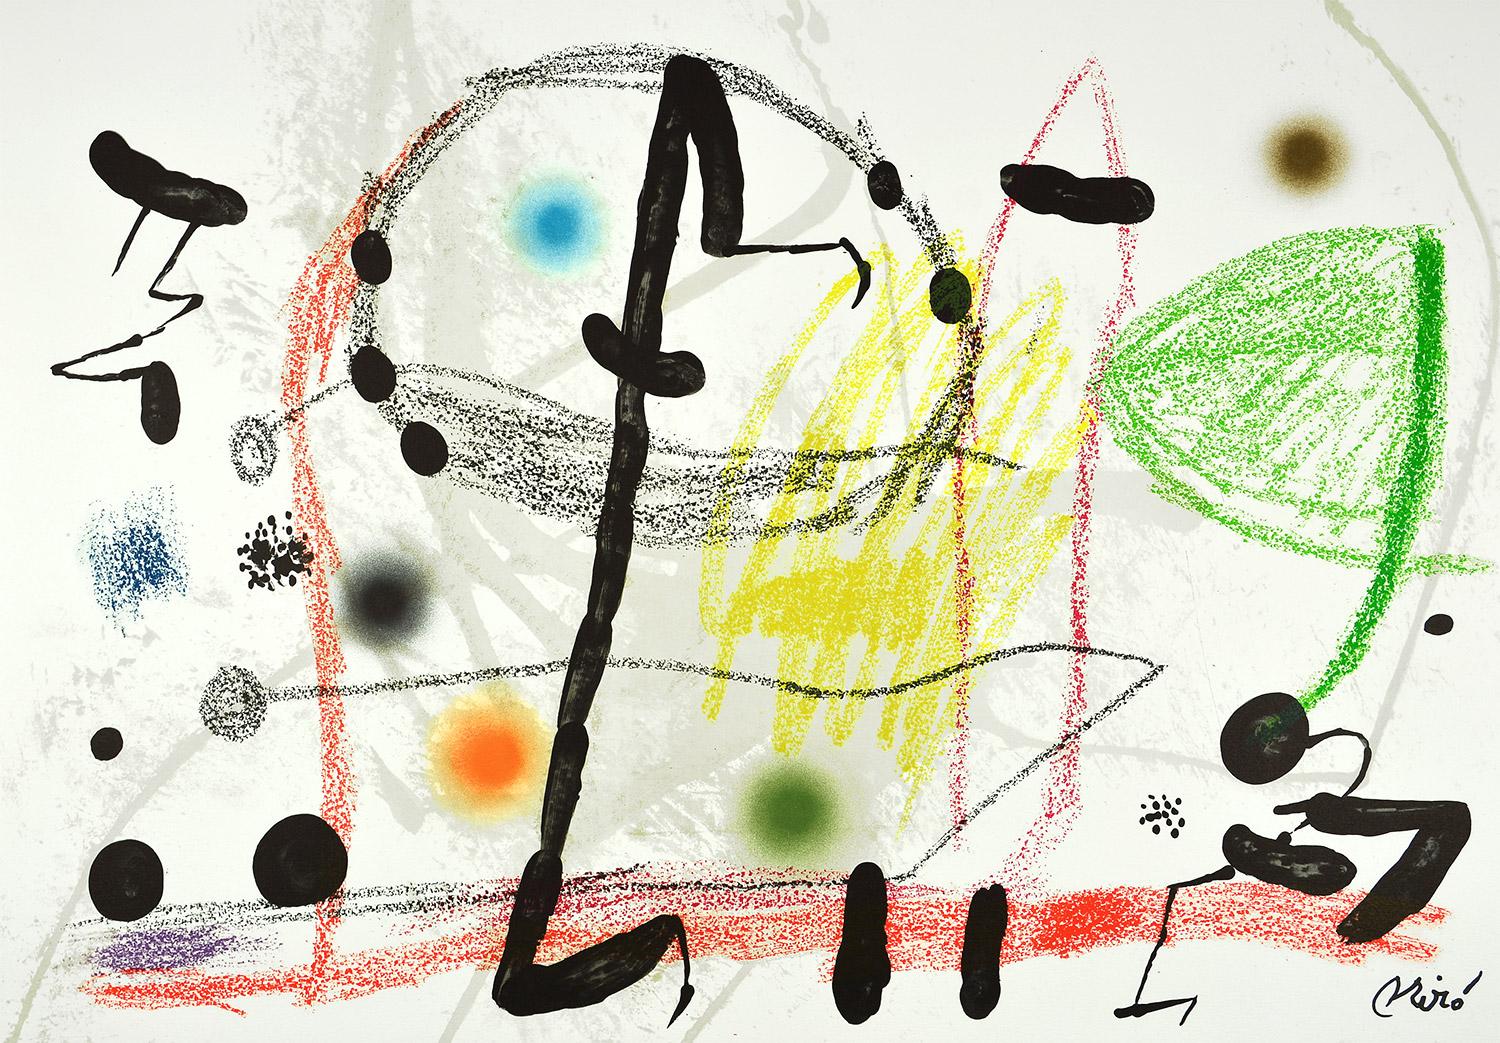 Joan Miró - Maravillas con variaciones acrósticas en el jardín de Miró XIII
Date of creation: 1975
Medium: Lithograph on Gvarro paper
Edition: 1500
Size: 49,5 x 71 cm
Condition: In very good conditions and never framed
Observations:
Lithograph on